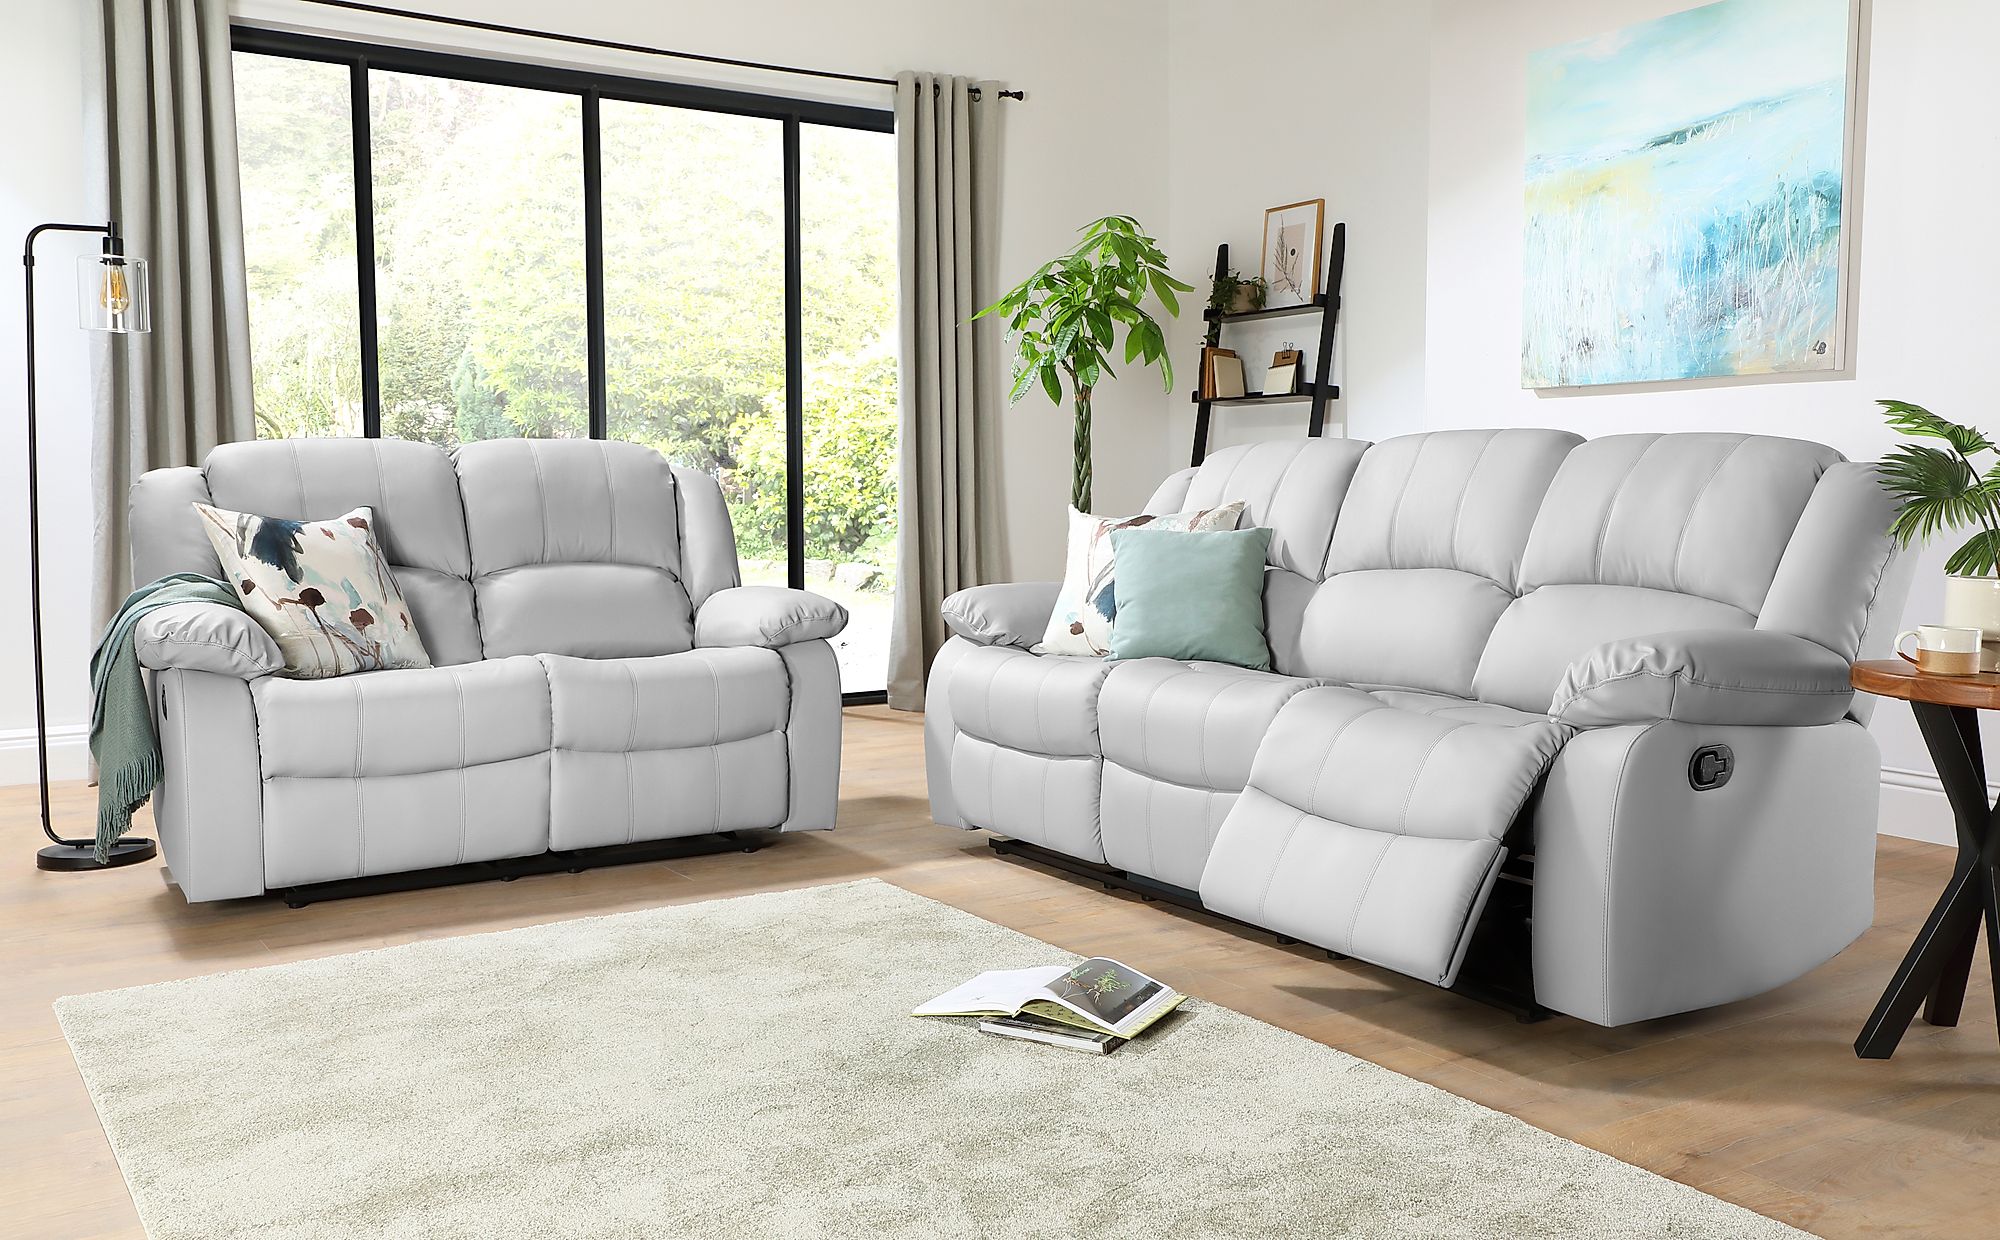 grey leather reclining sofa sets